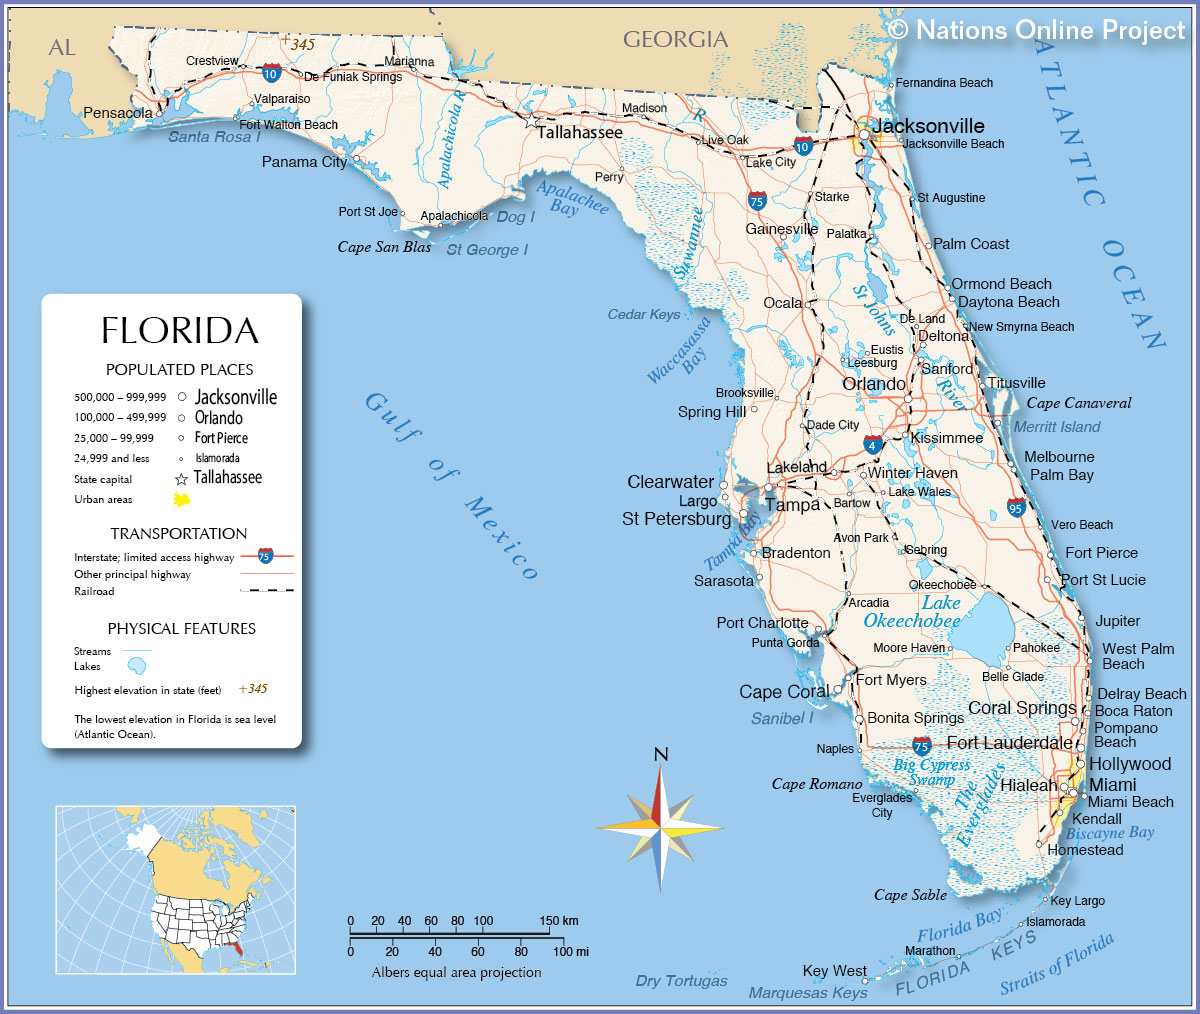 1200X1014Px Wallpaper Daytona Beach Fl - Wallpapersafari - Where Is Daytona Beach Florida On The Map